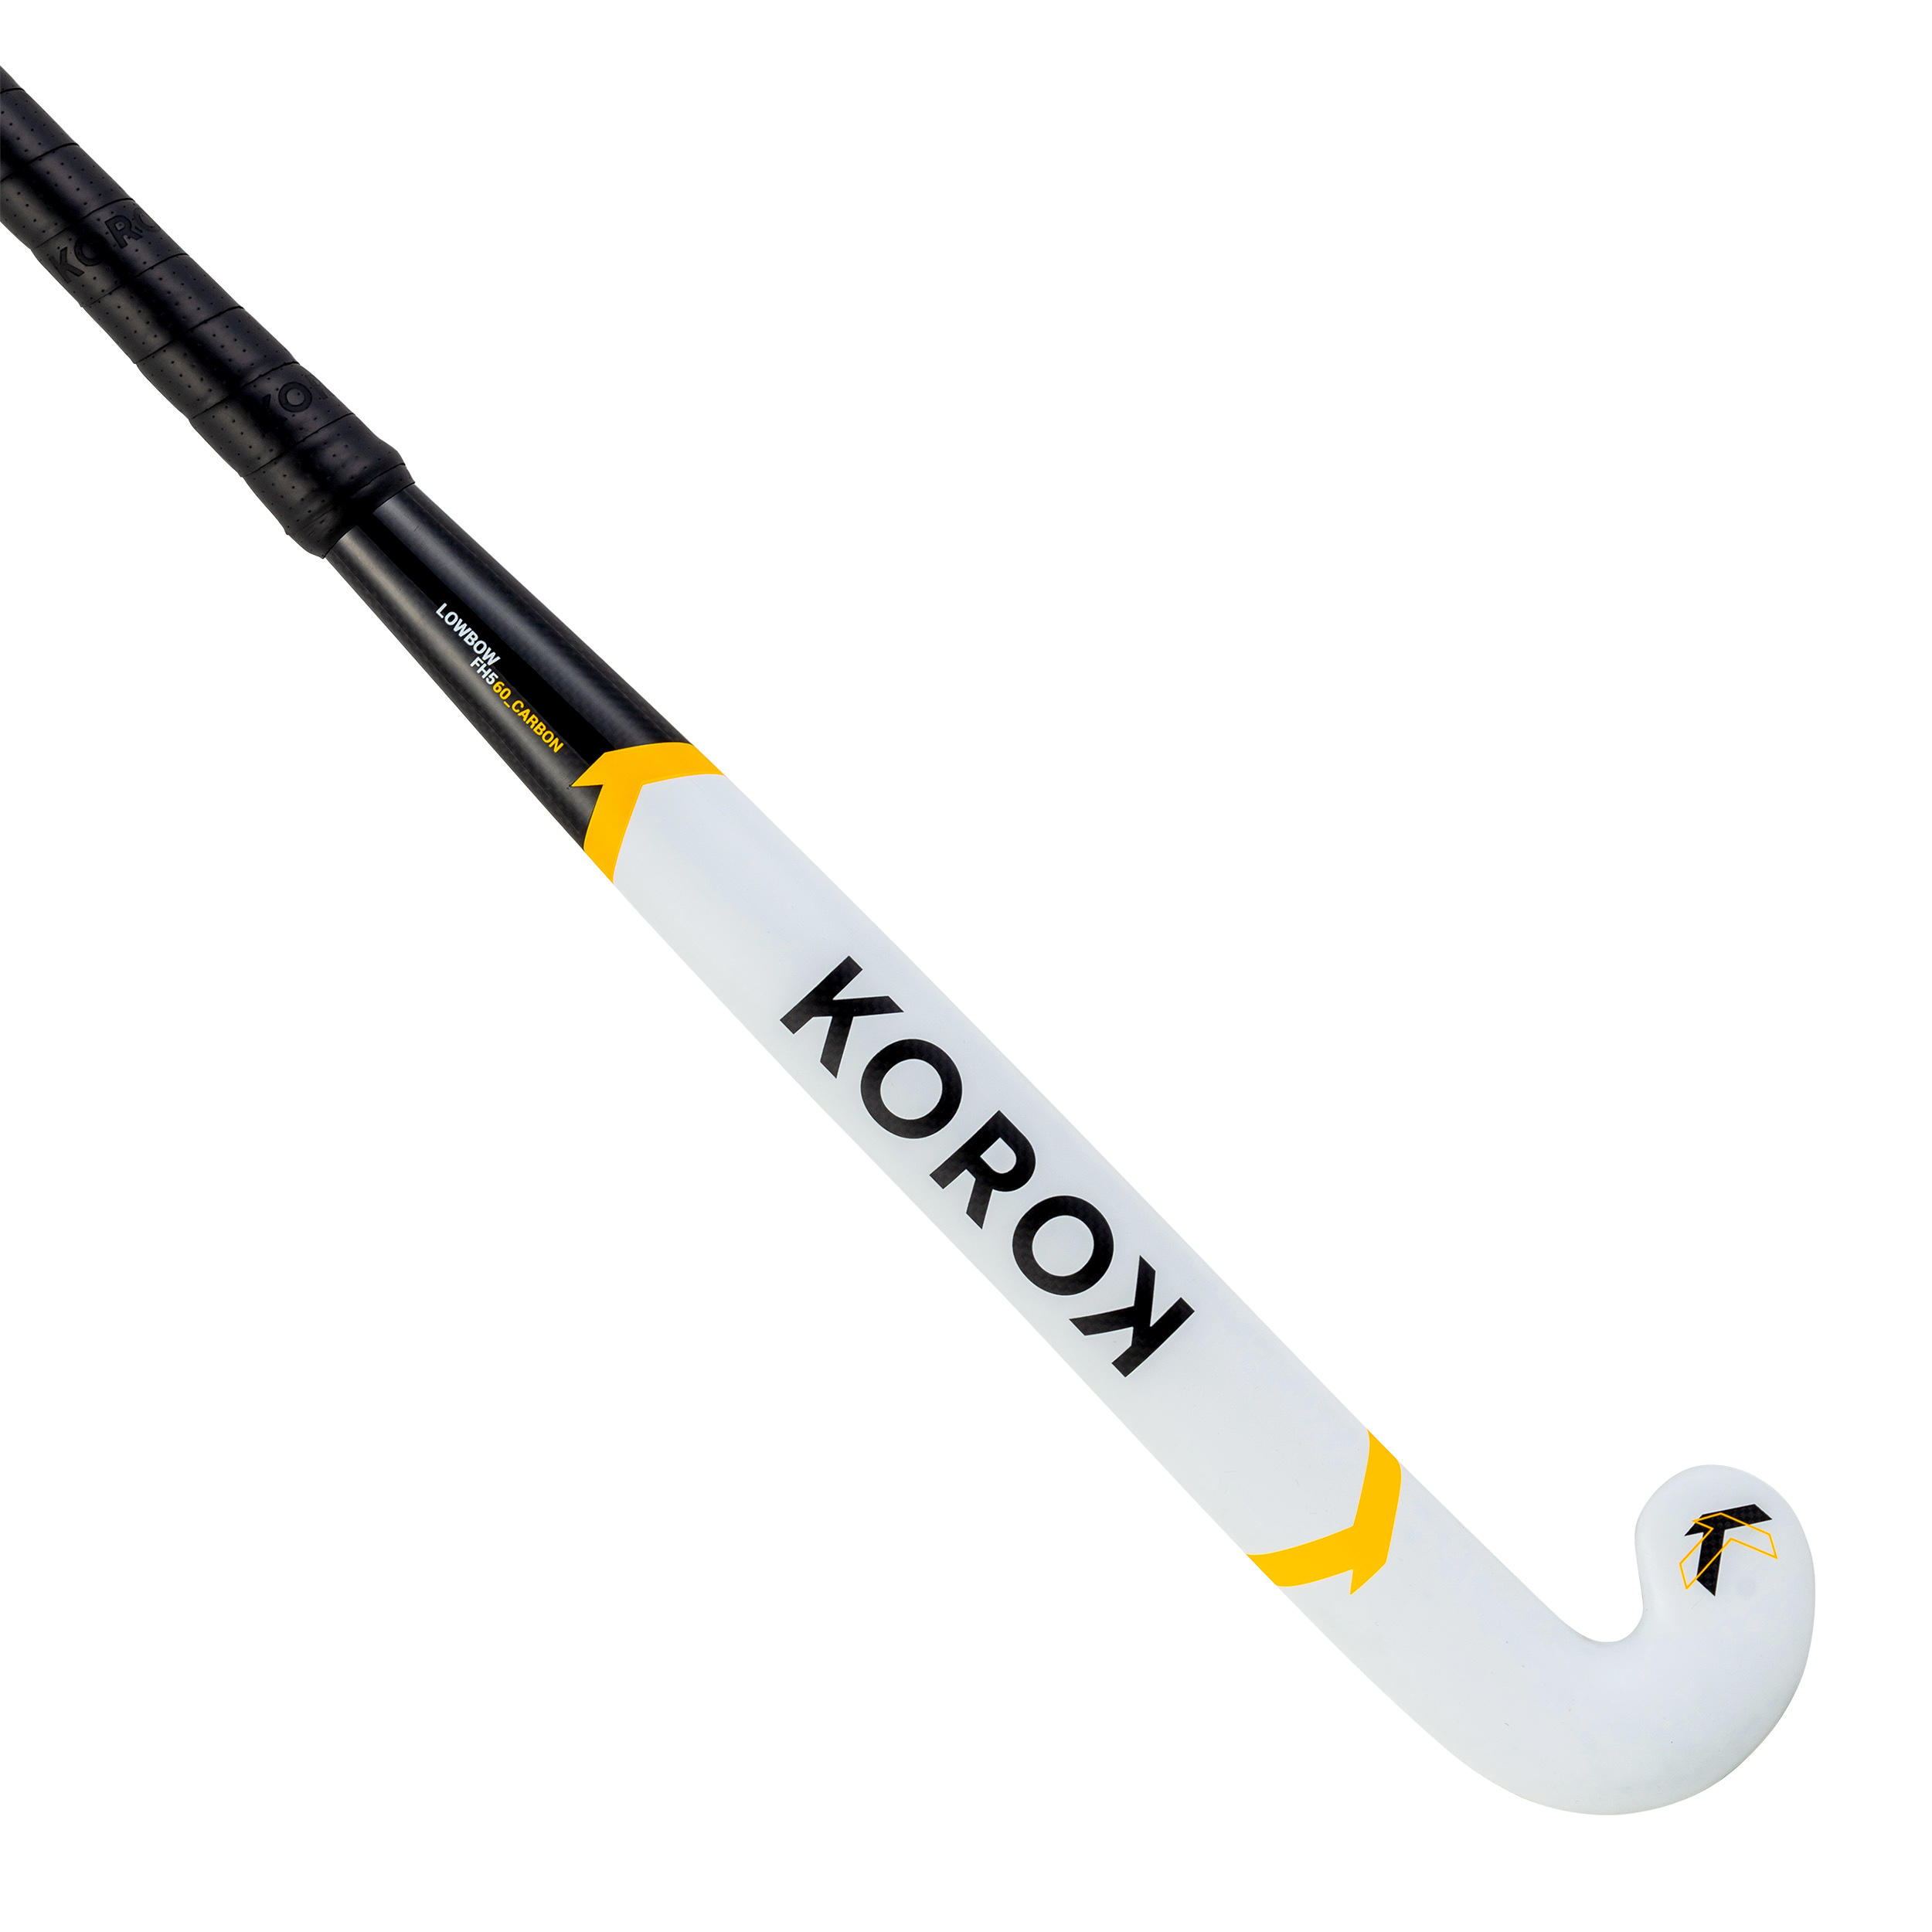 KOROK Adult Intermediate 60% Carbon Low Bow Field Hockey Stick FH560 - White/Yellow